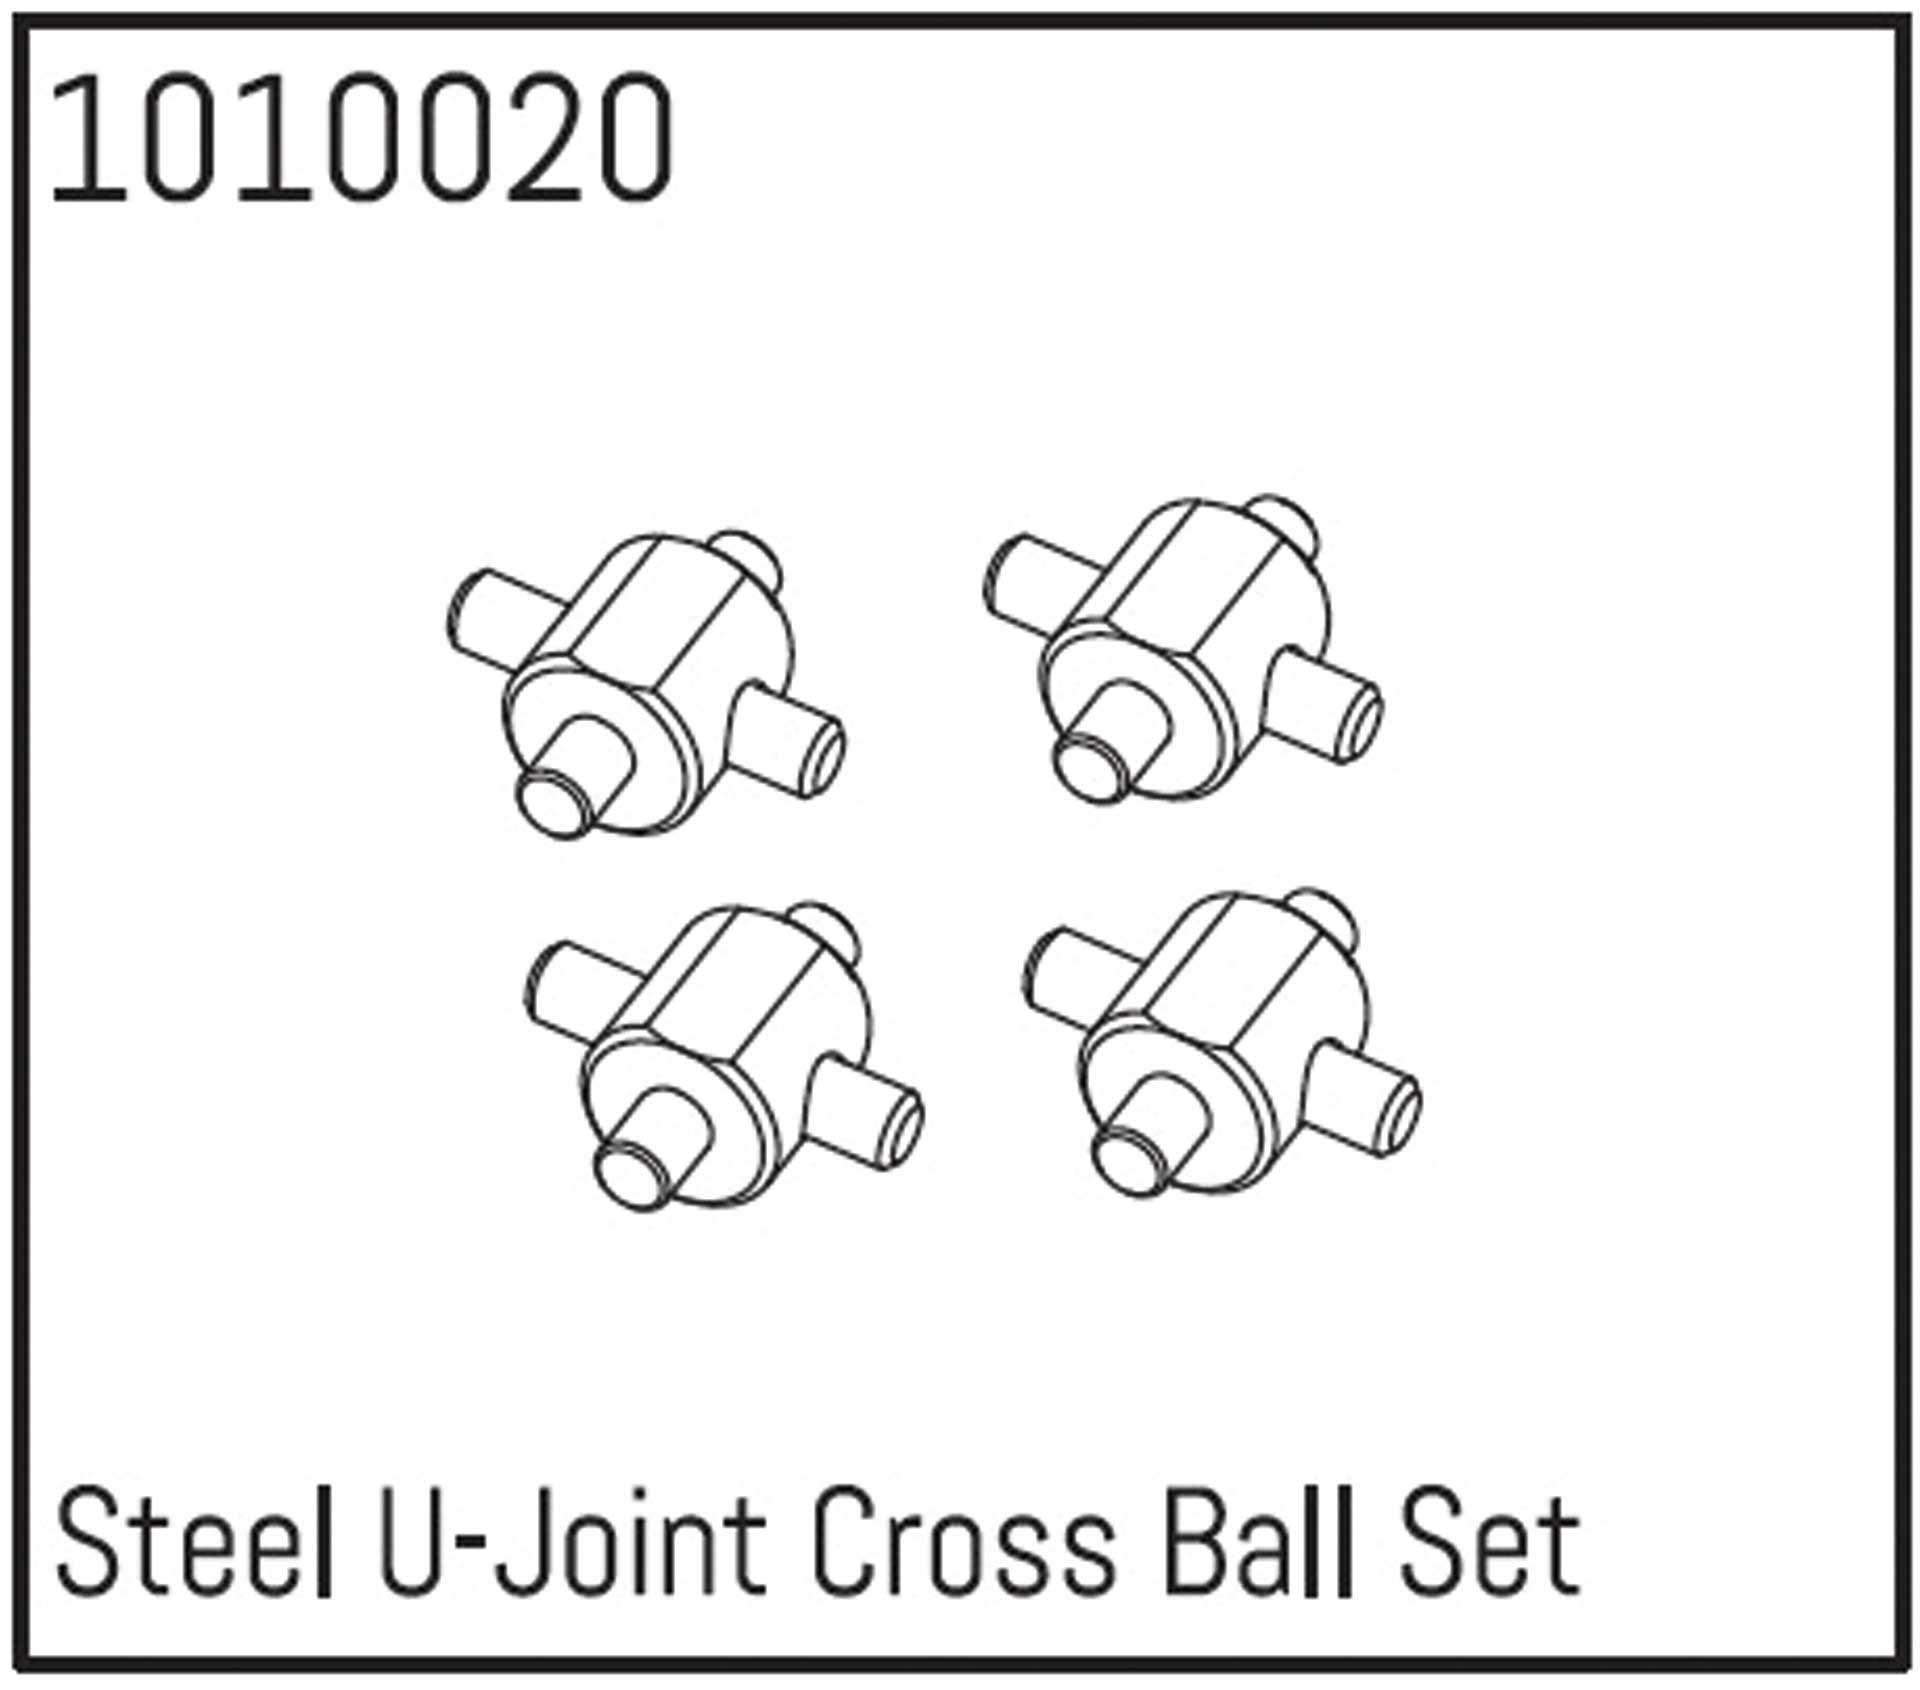 ABSIMA Steel U-Joint Cross Ball Set